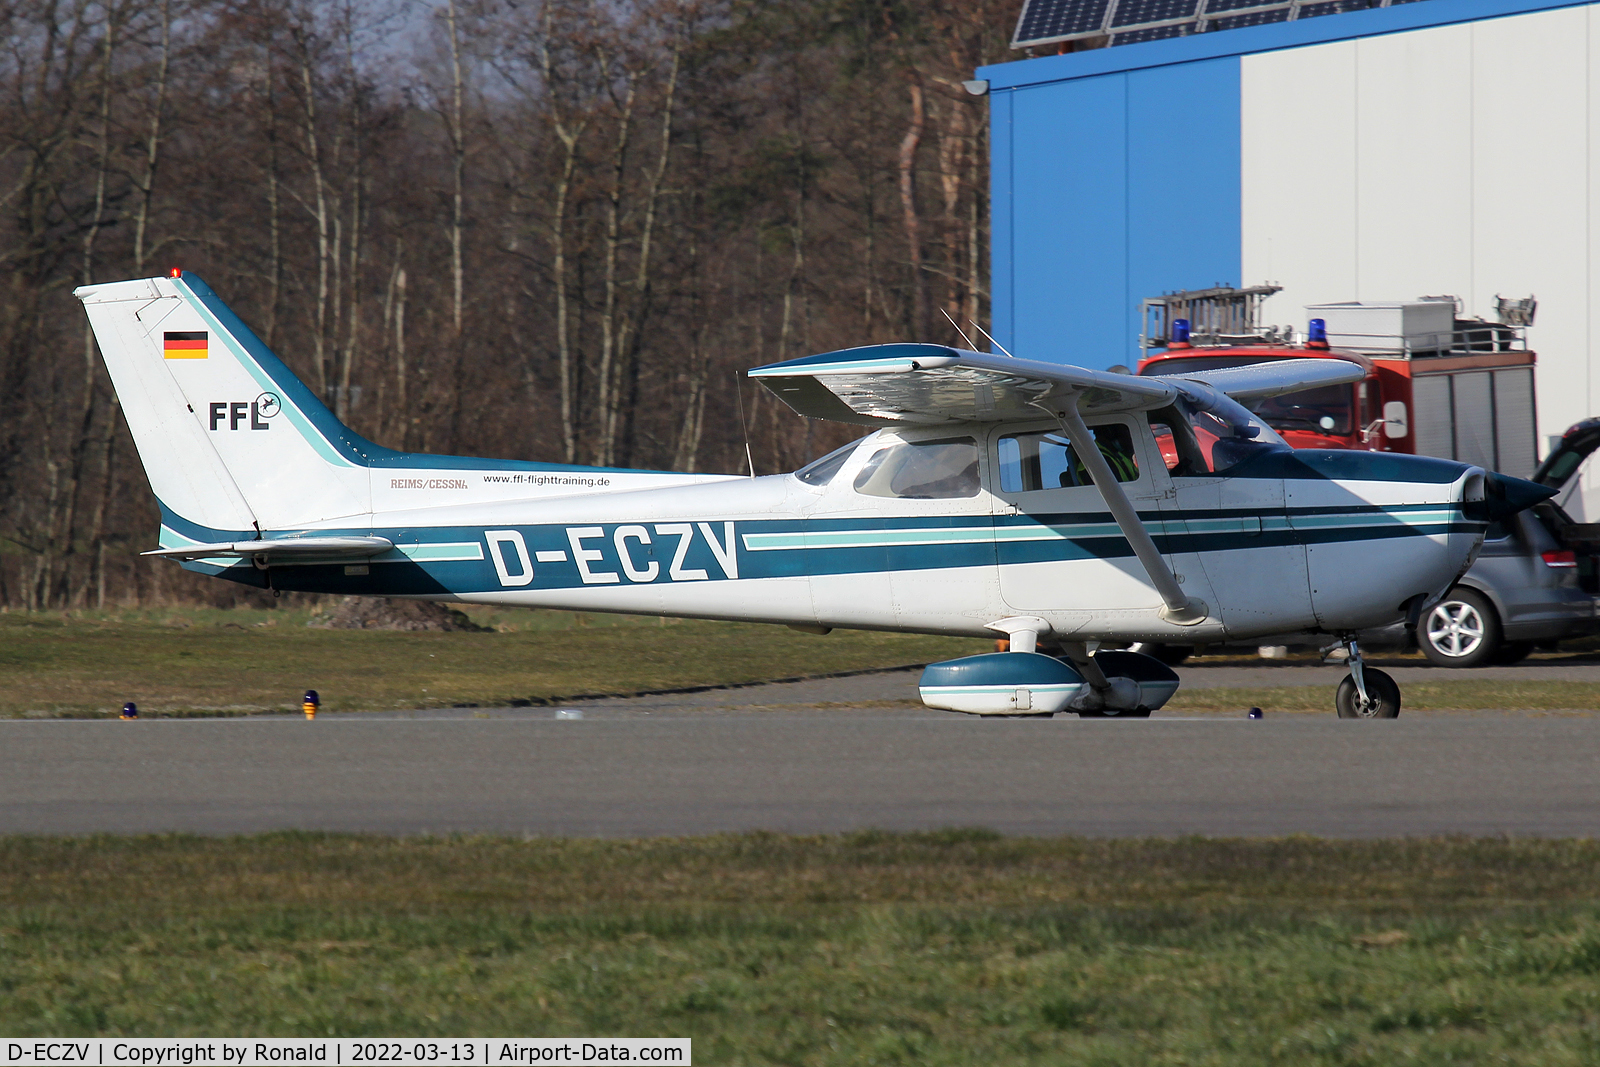 D-ECZV, 1976 Reims F172M Skyhawk Skyhawk C/N 1410, at edls